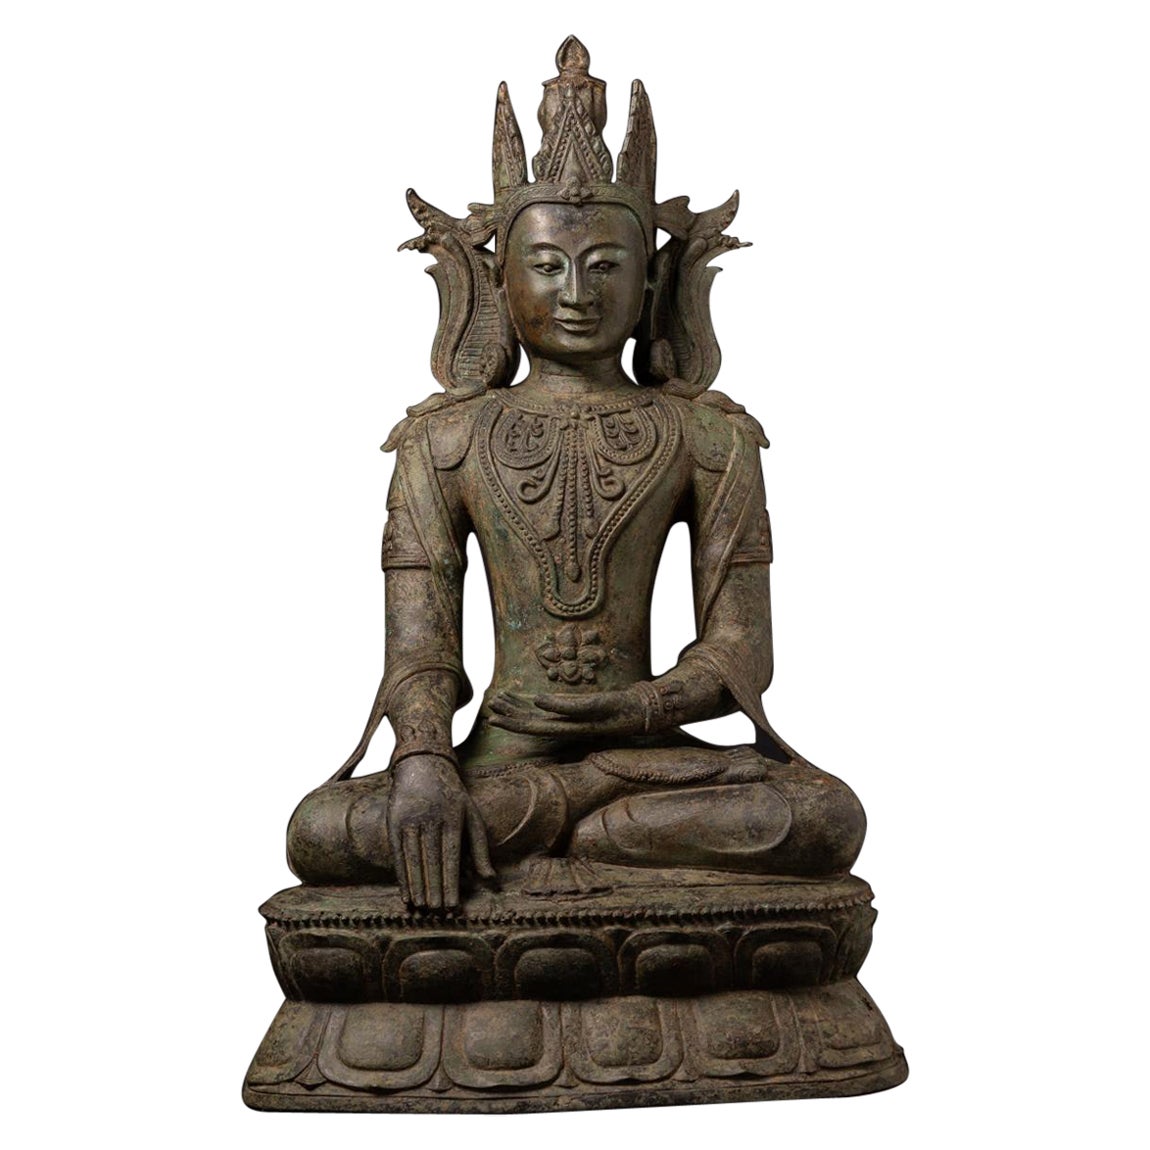 19th century Special antique bronze Arakan Buddha statue from Burma